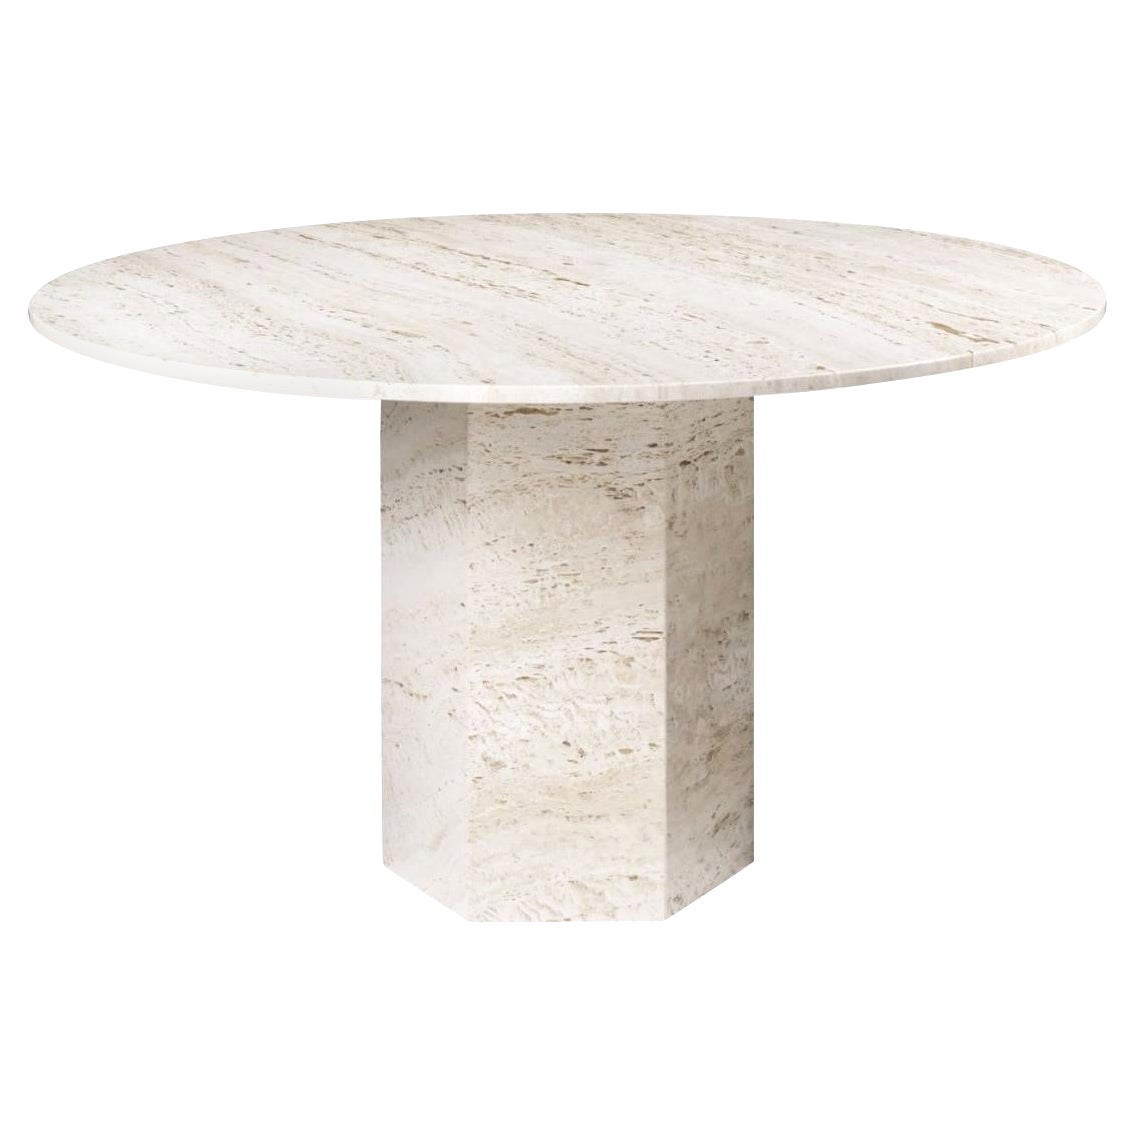 Travertine Epic Dining Table by Gamfratesi for Gubi in Neutral White